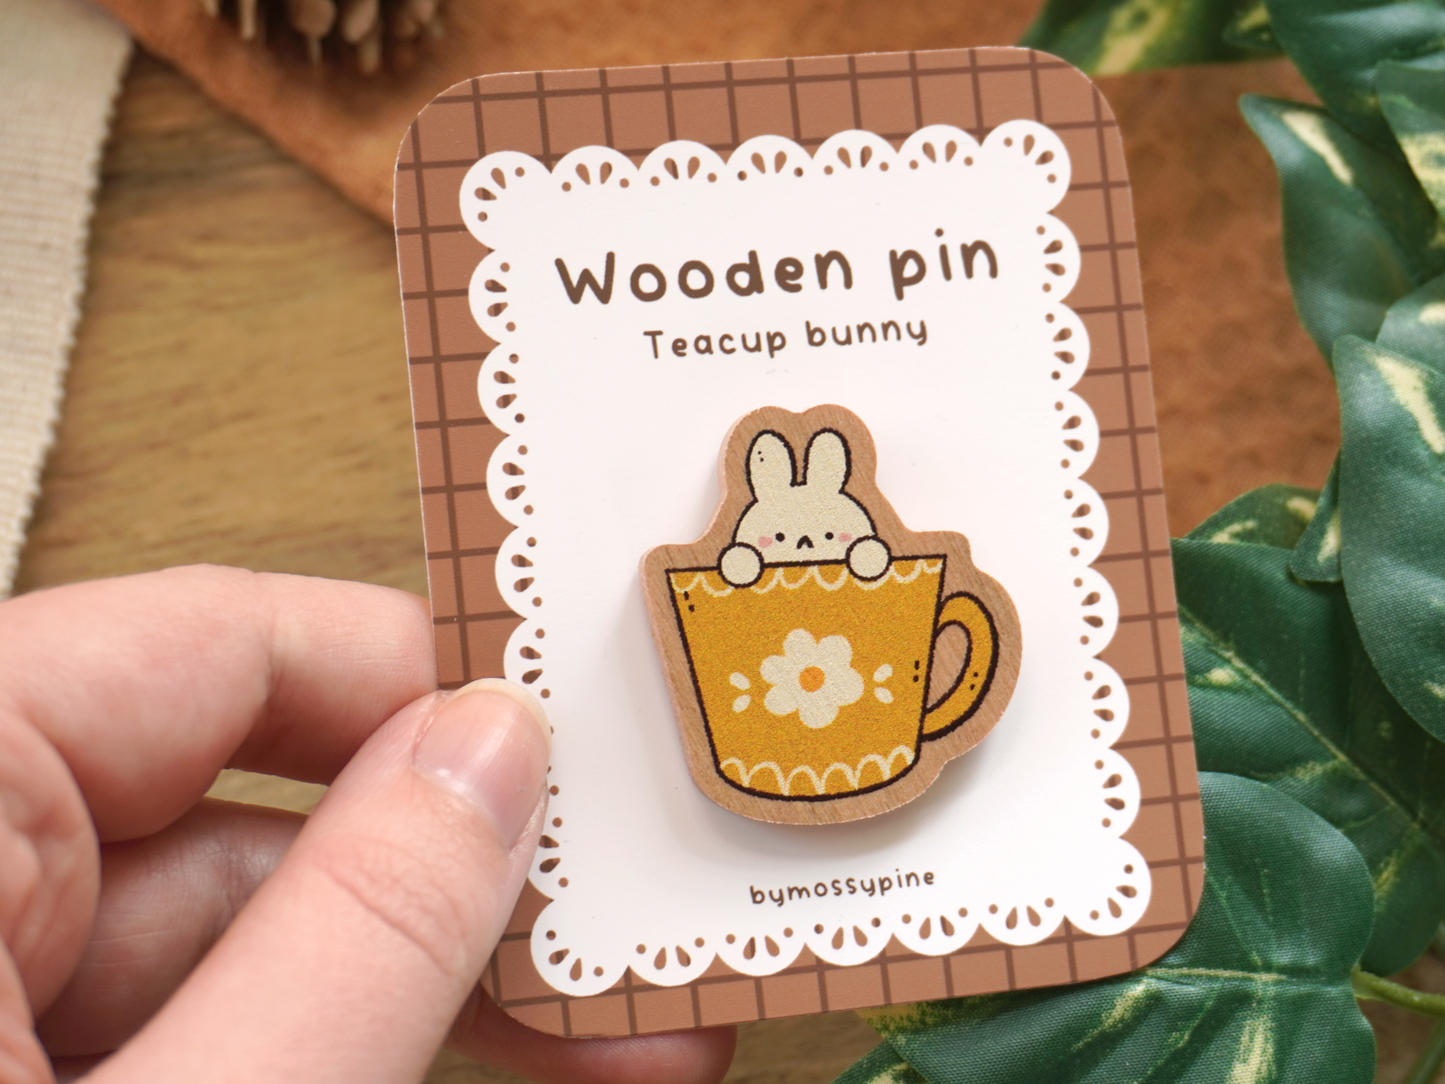 Green Teacup Bunny Wooden Pin